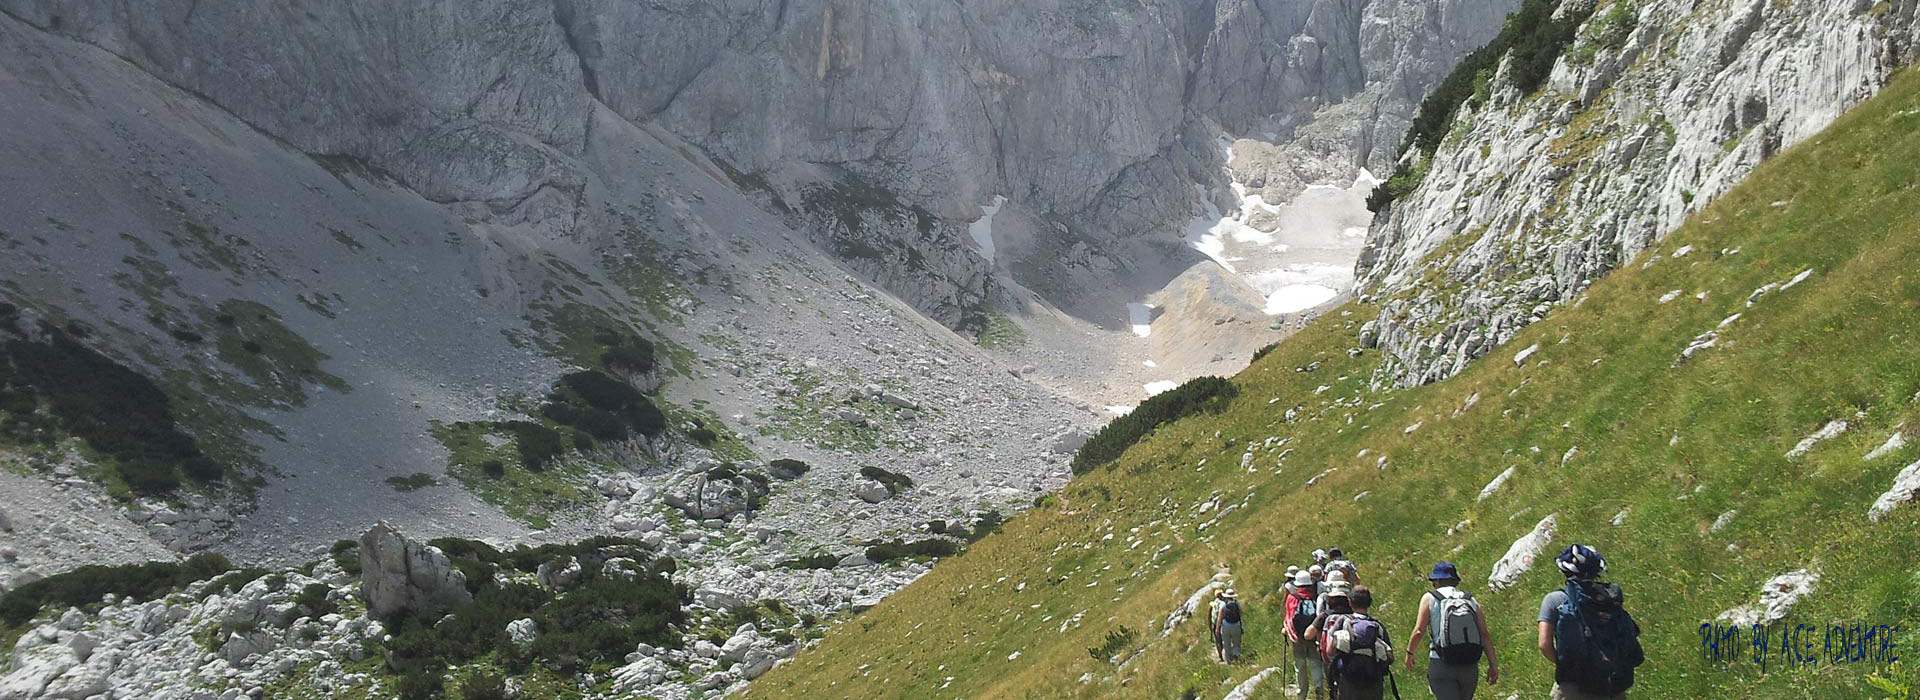 Montenegro walking guided holiday - Durmitor hiking